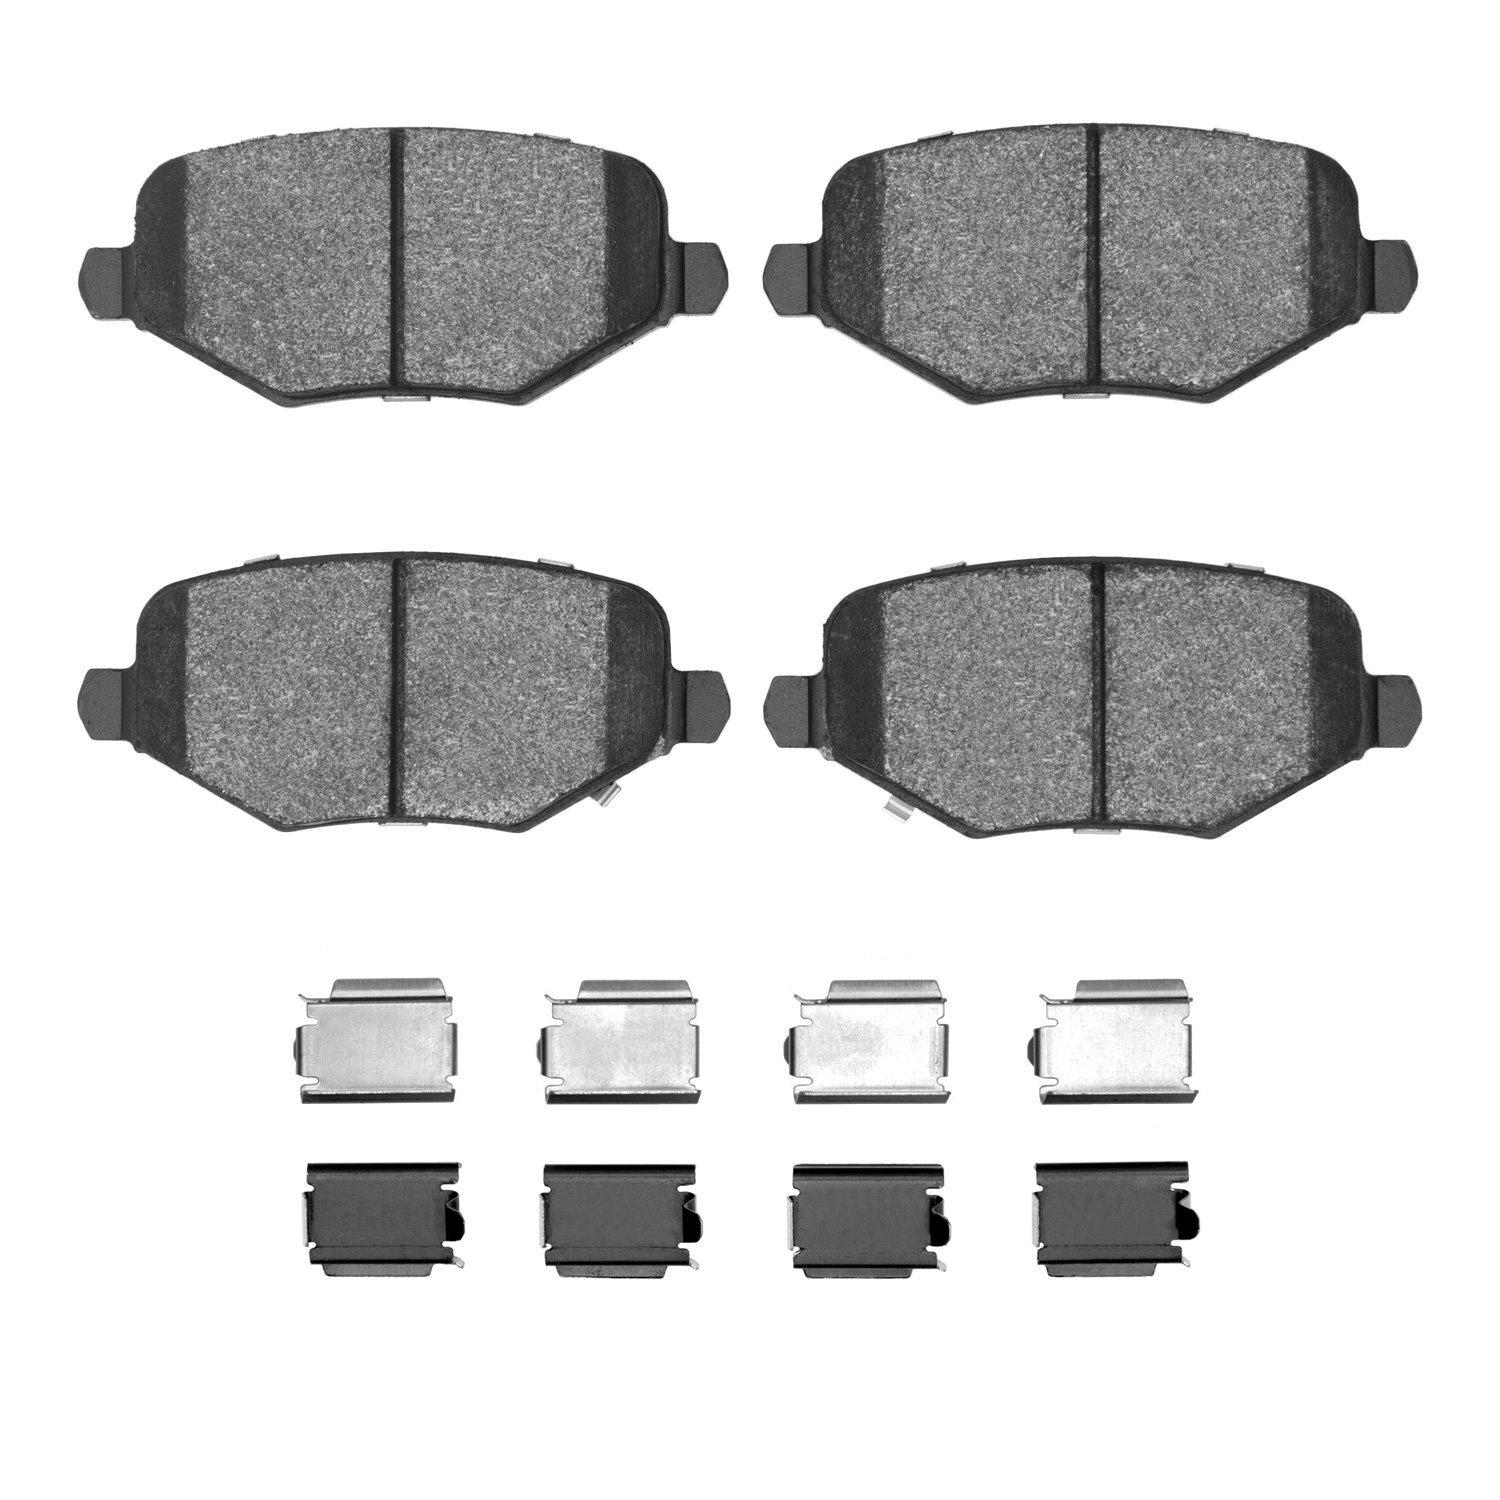 1600-1719-02 5000 Euro Ceramic Brake Pads & Hardware Kit, 2009-2014 Multiple Makes/Models, Position: Rear